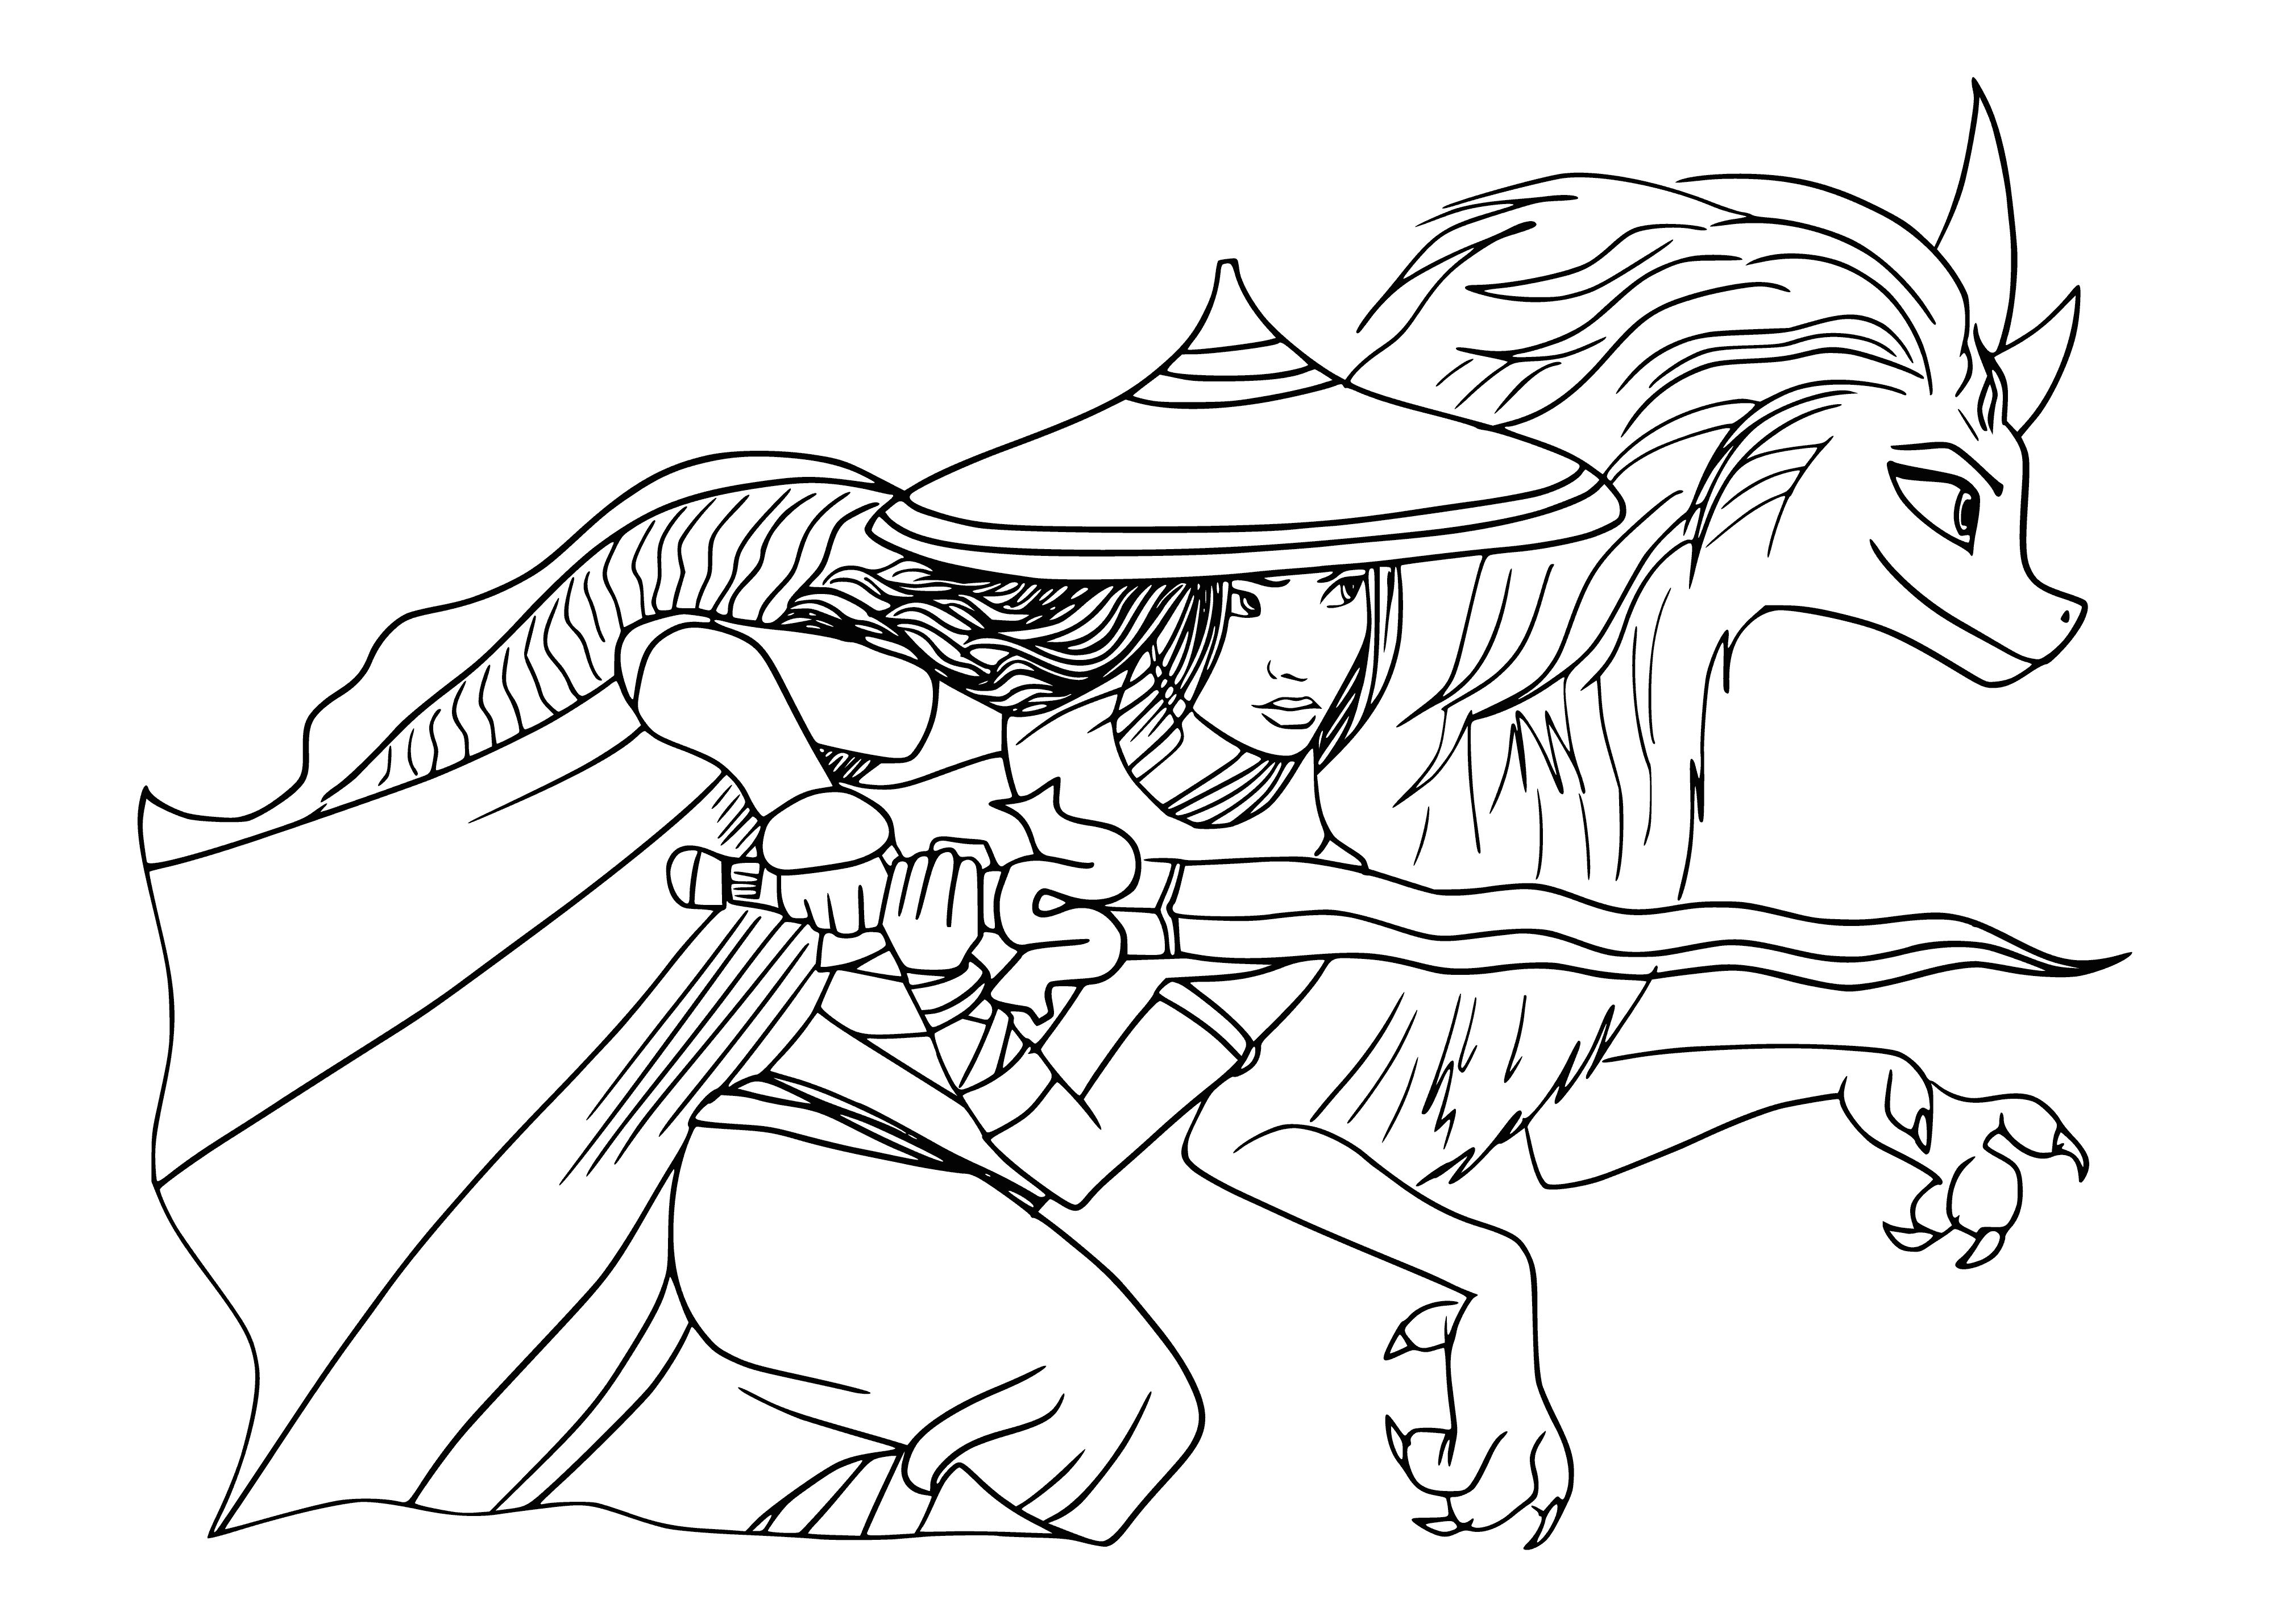 Raya and the dragon Shisu coloring page